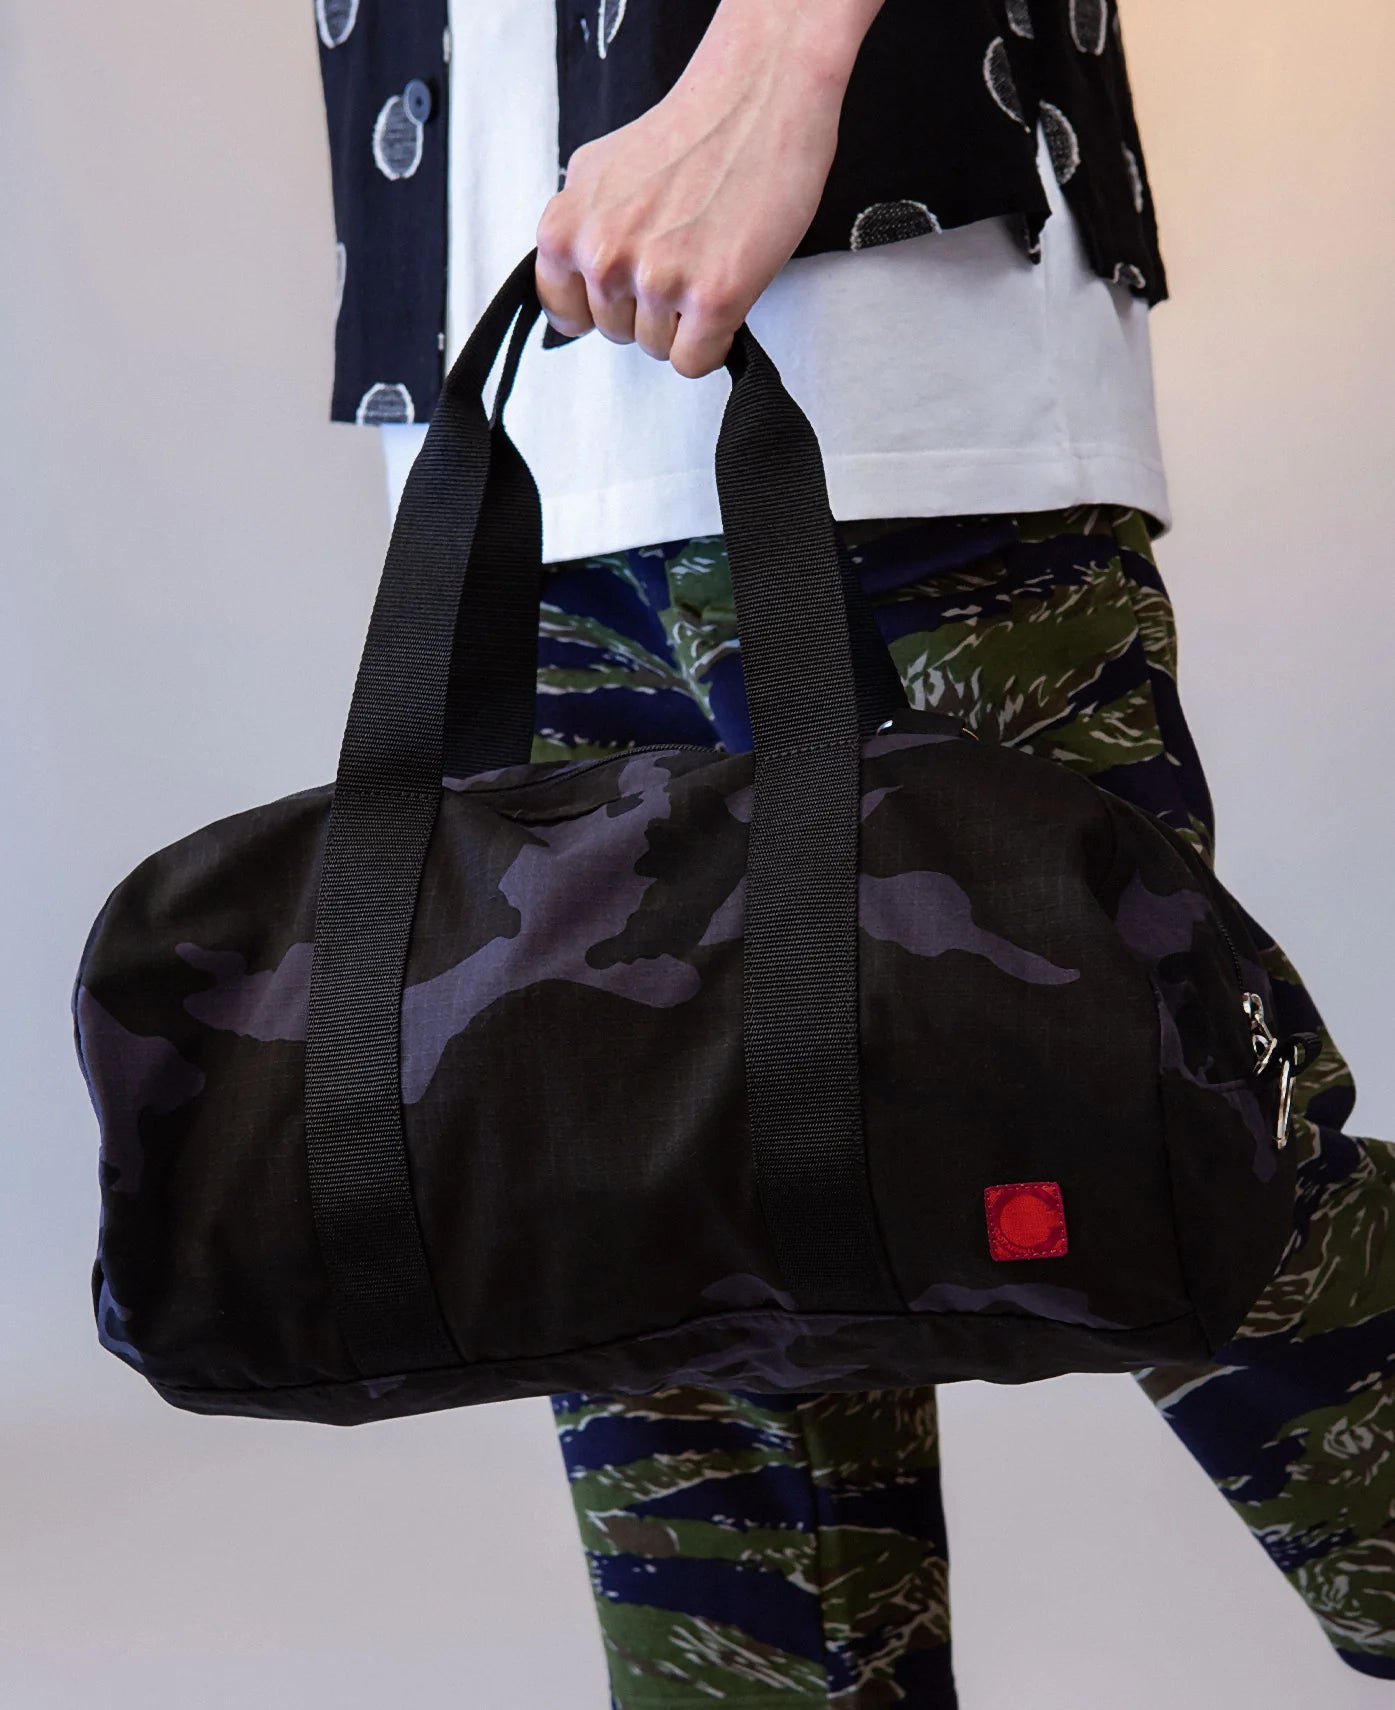 Small Duffle Bag - Black/Camo